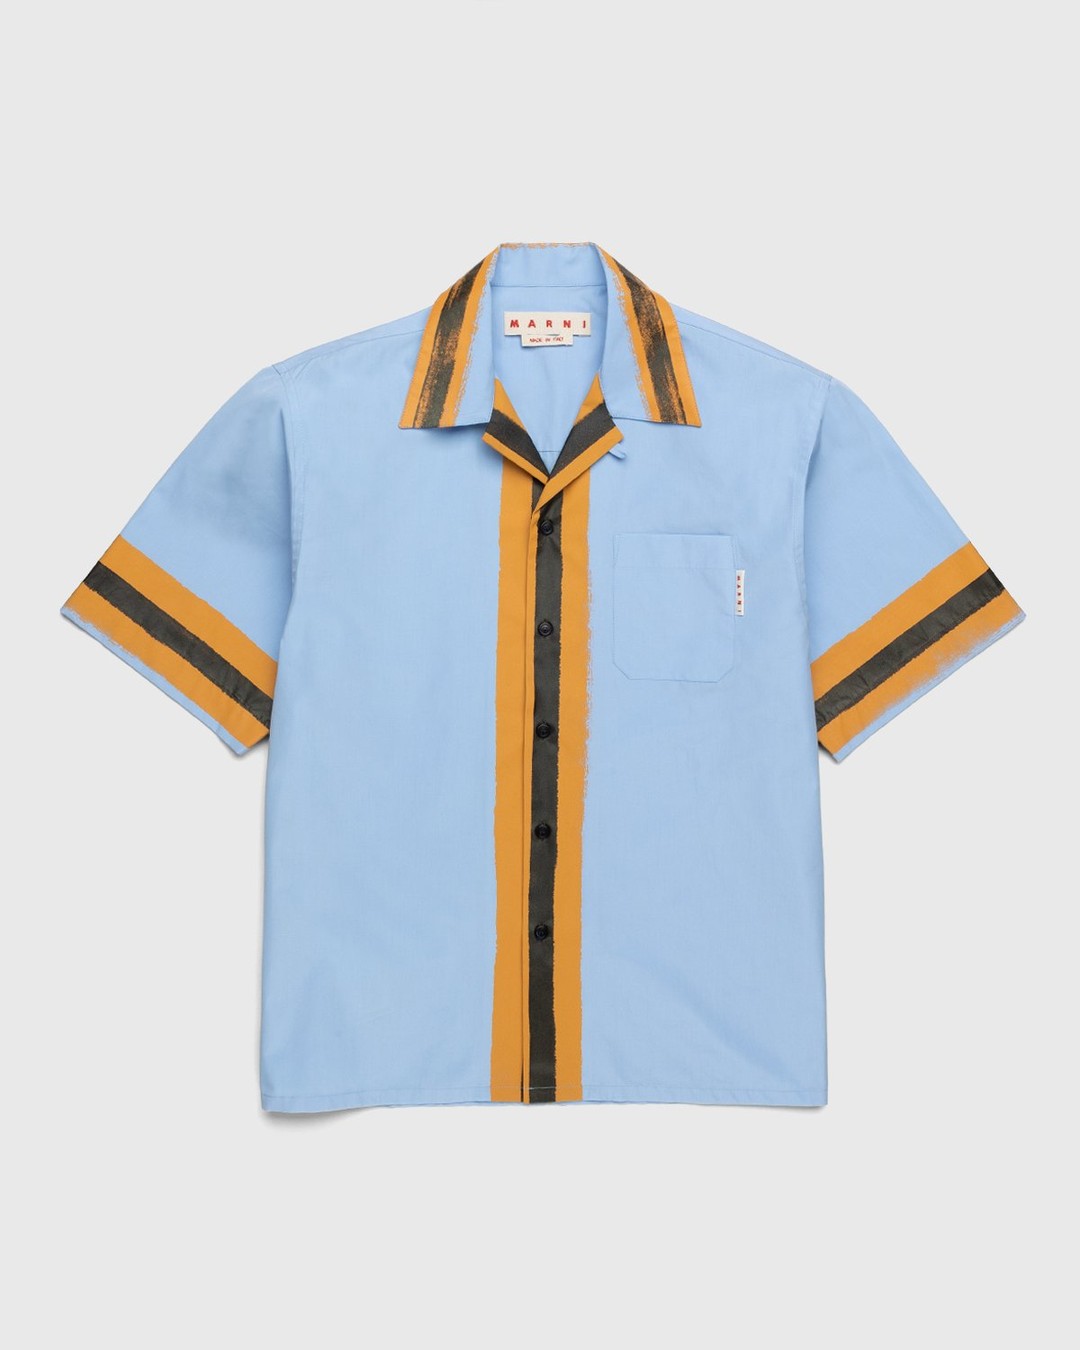 Marni – Nostalgia Stripe Poplin Shirt Lake Blue - Shortsleeve Shirts - Blue - Image 1